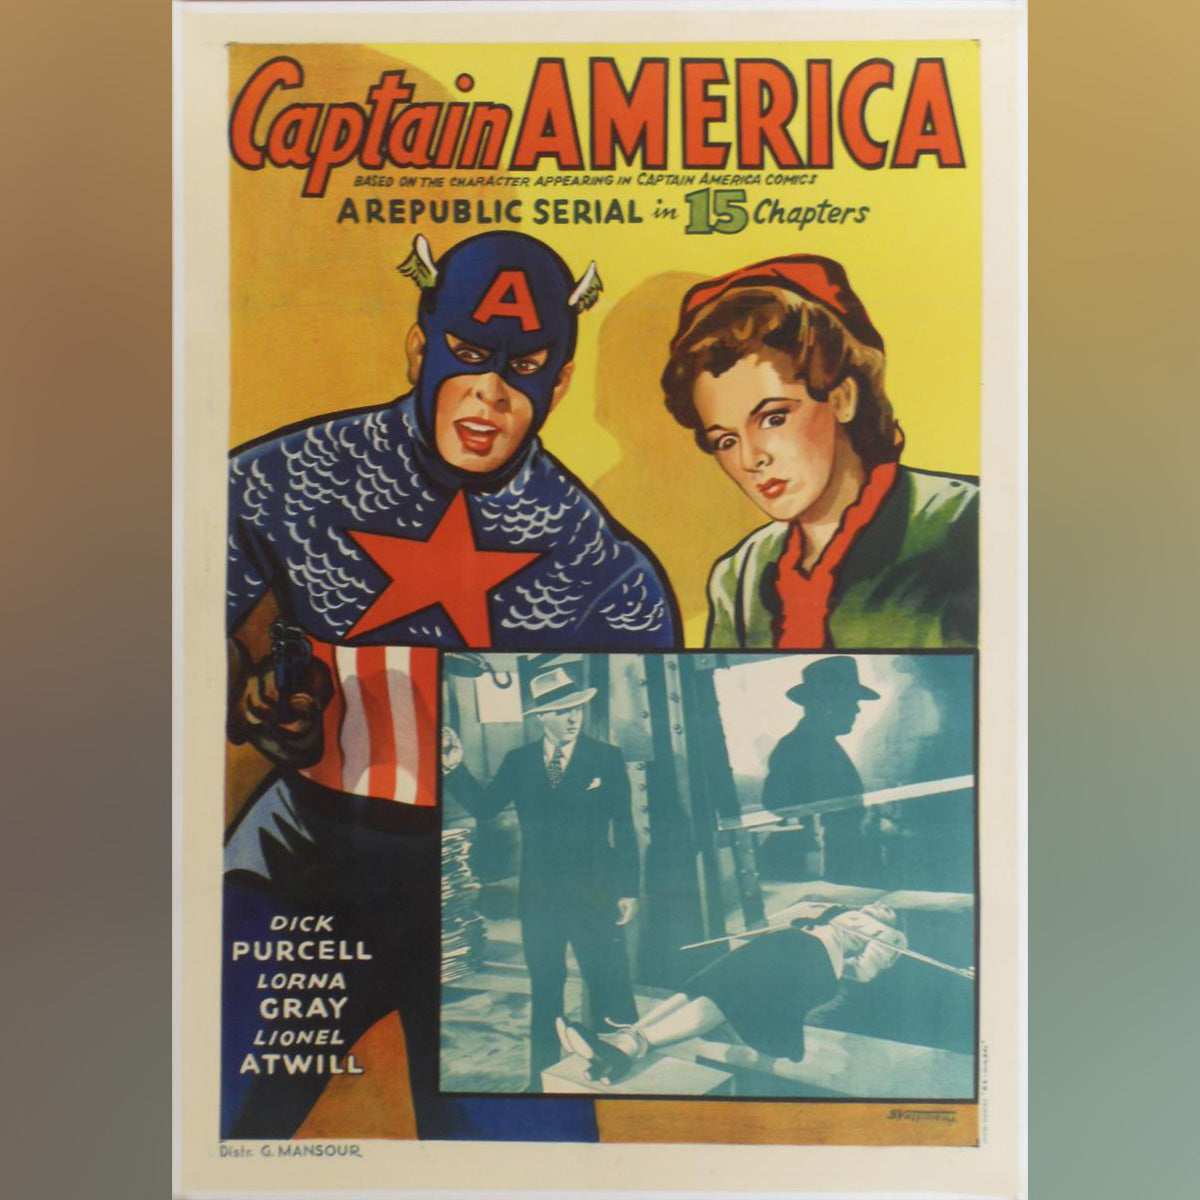 Original Movie Poster of Captain America (1950R)